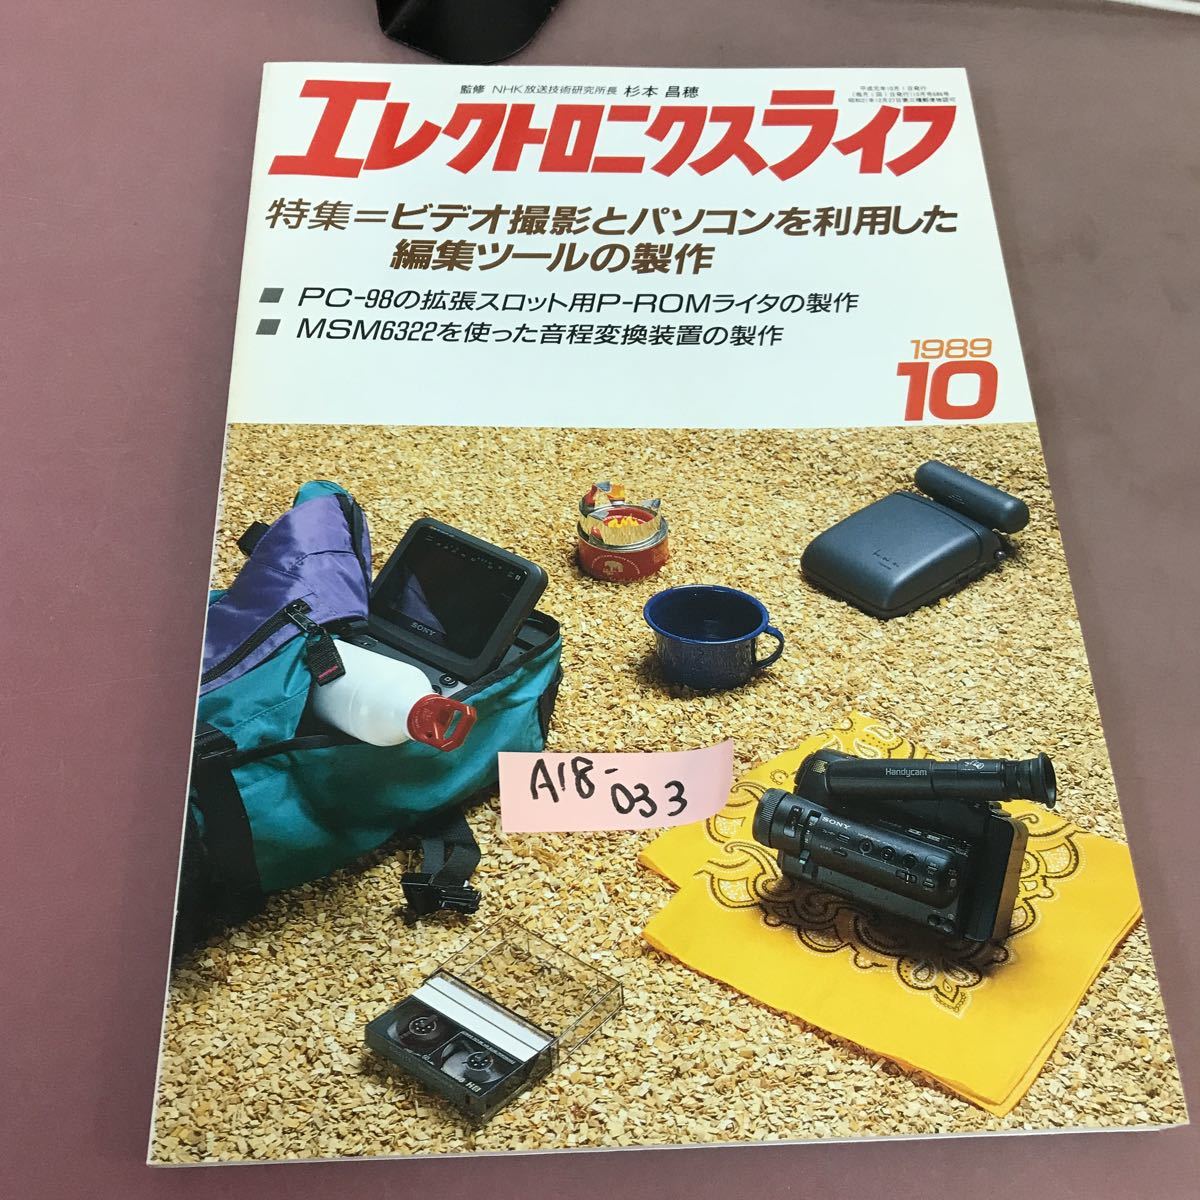 A18-033 エレクトロニクスライフ 1989.10 特集ビデオ撮影とパソコンを利用した編集ツールの製作 日本放送出版協会